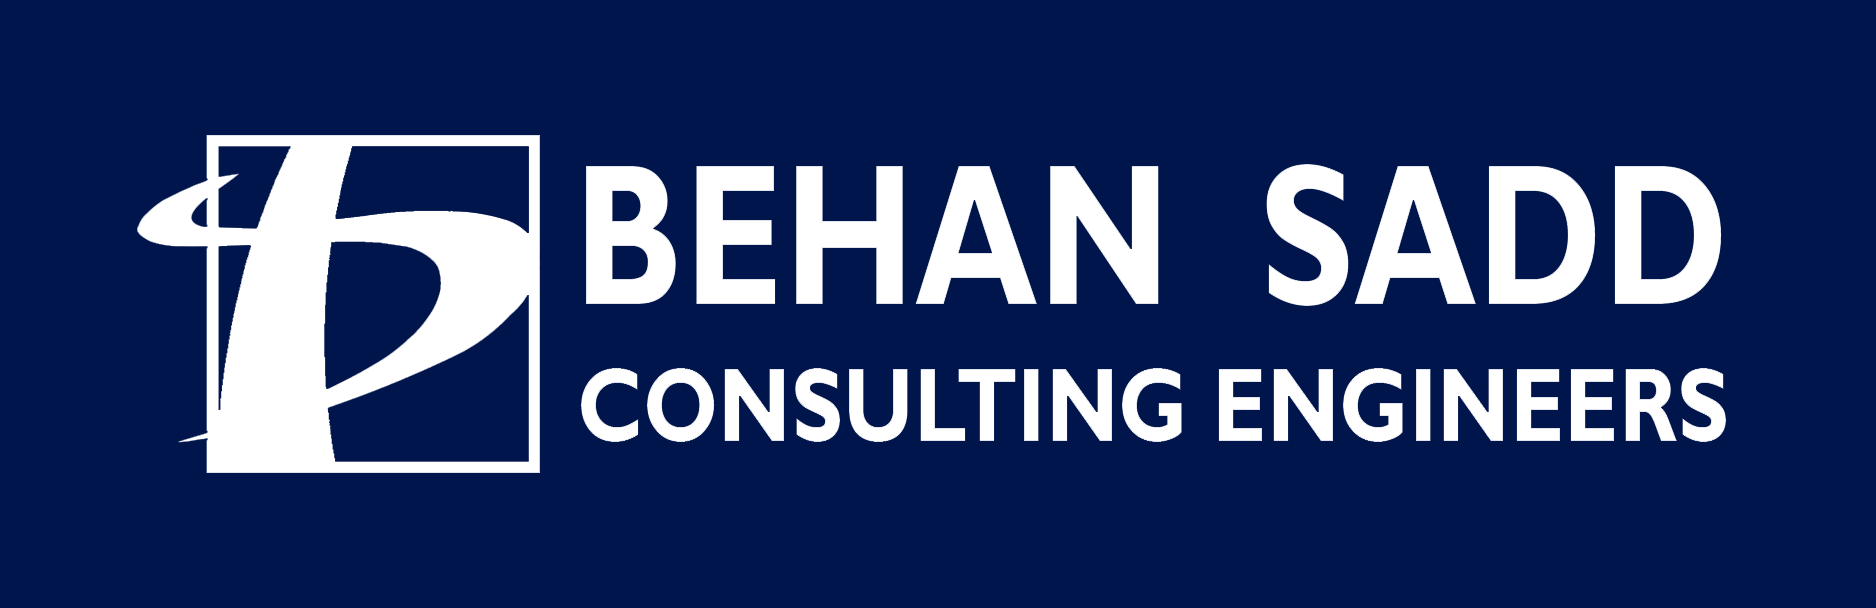 Behan Sadd Consulting Engineers Company